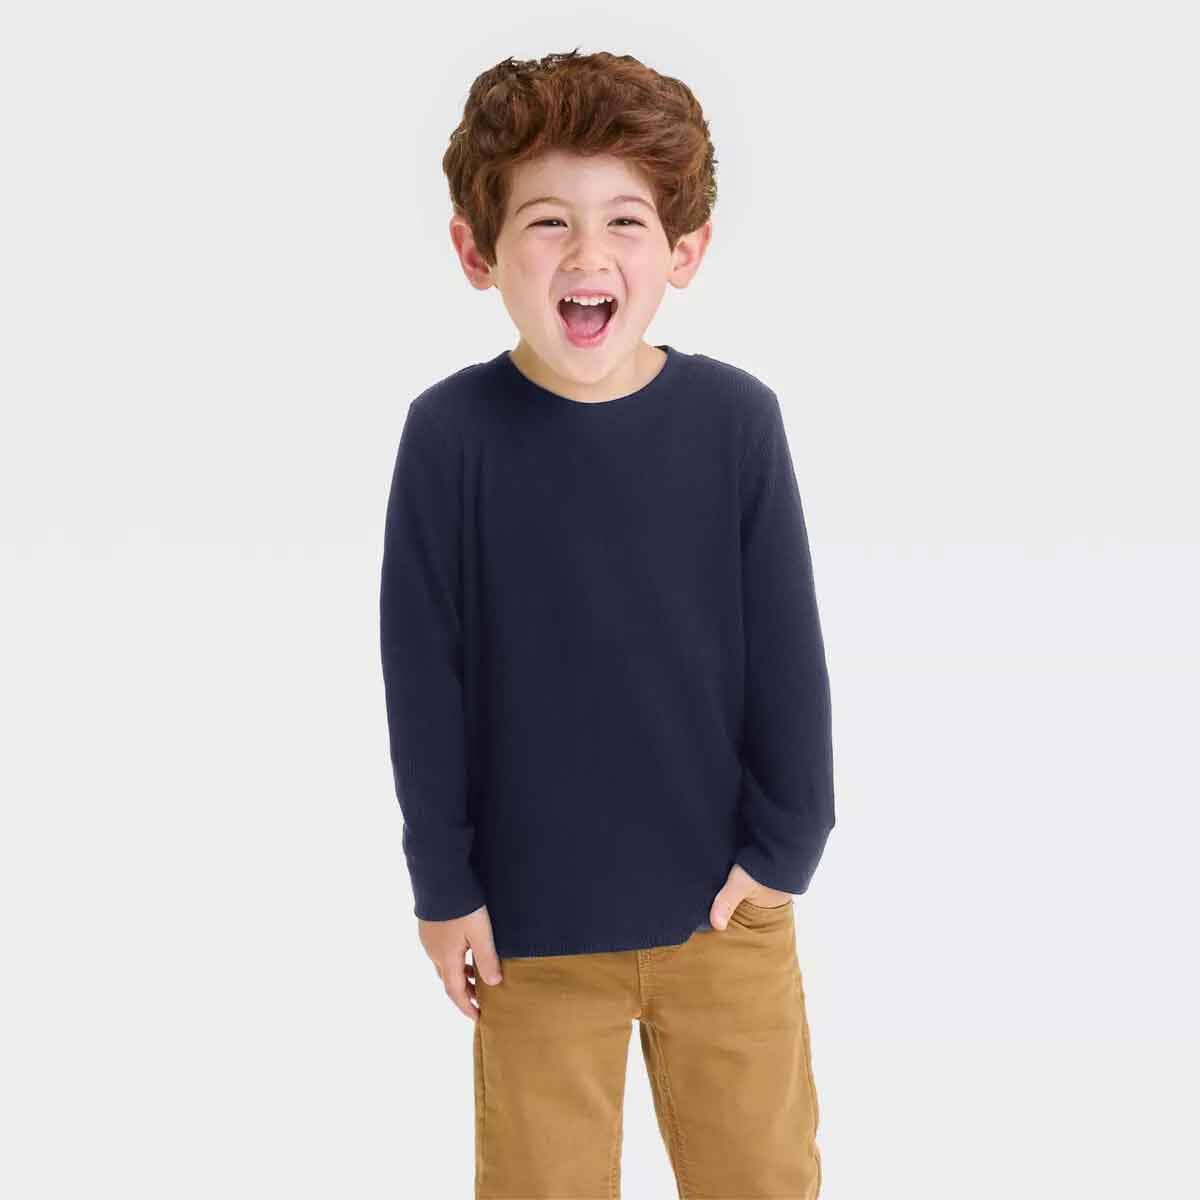 Excellent Kid's Thermal Long Sleeve Winter Knit Wear Shirt Boy's Sweat Shirt SRL Navy 18 (6-9 Months) 